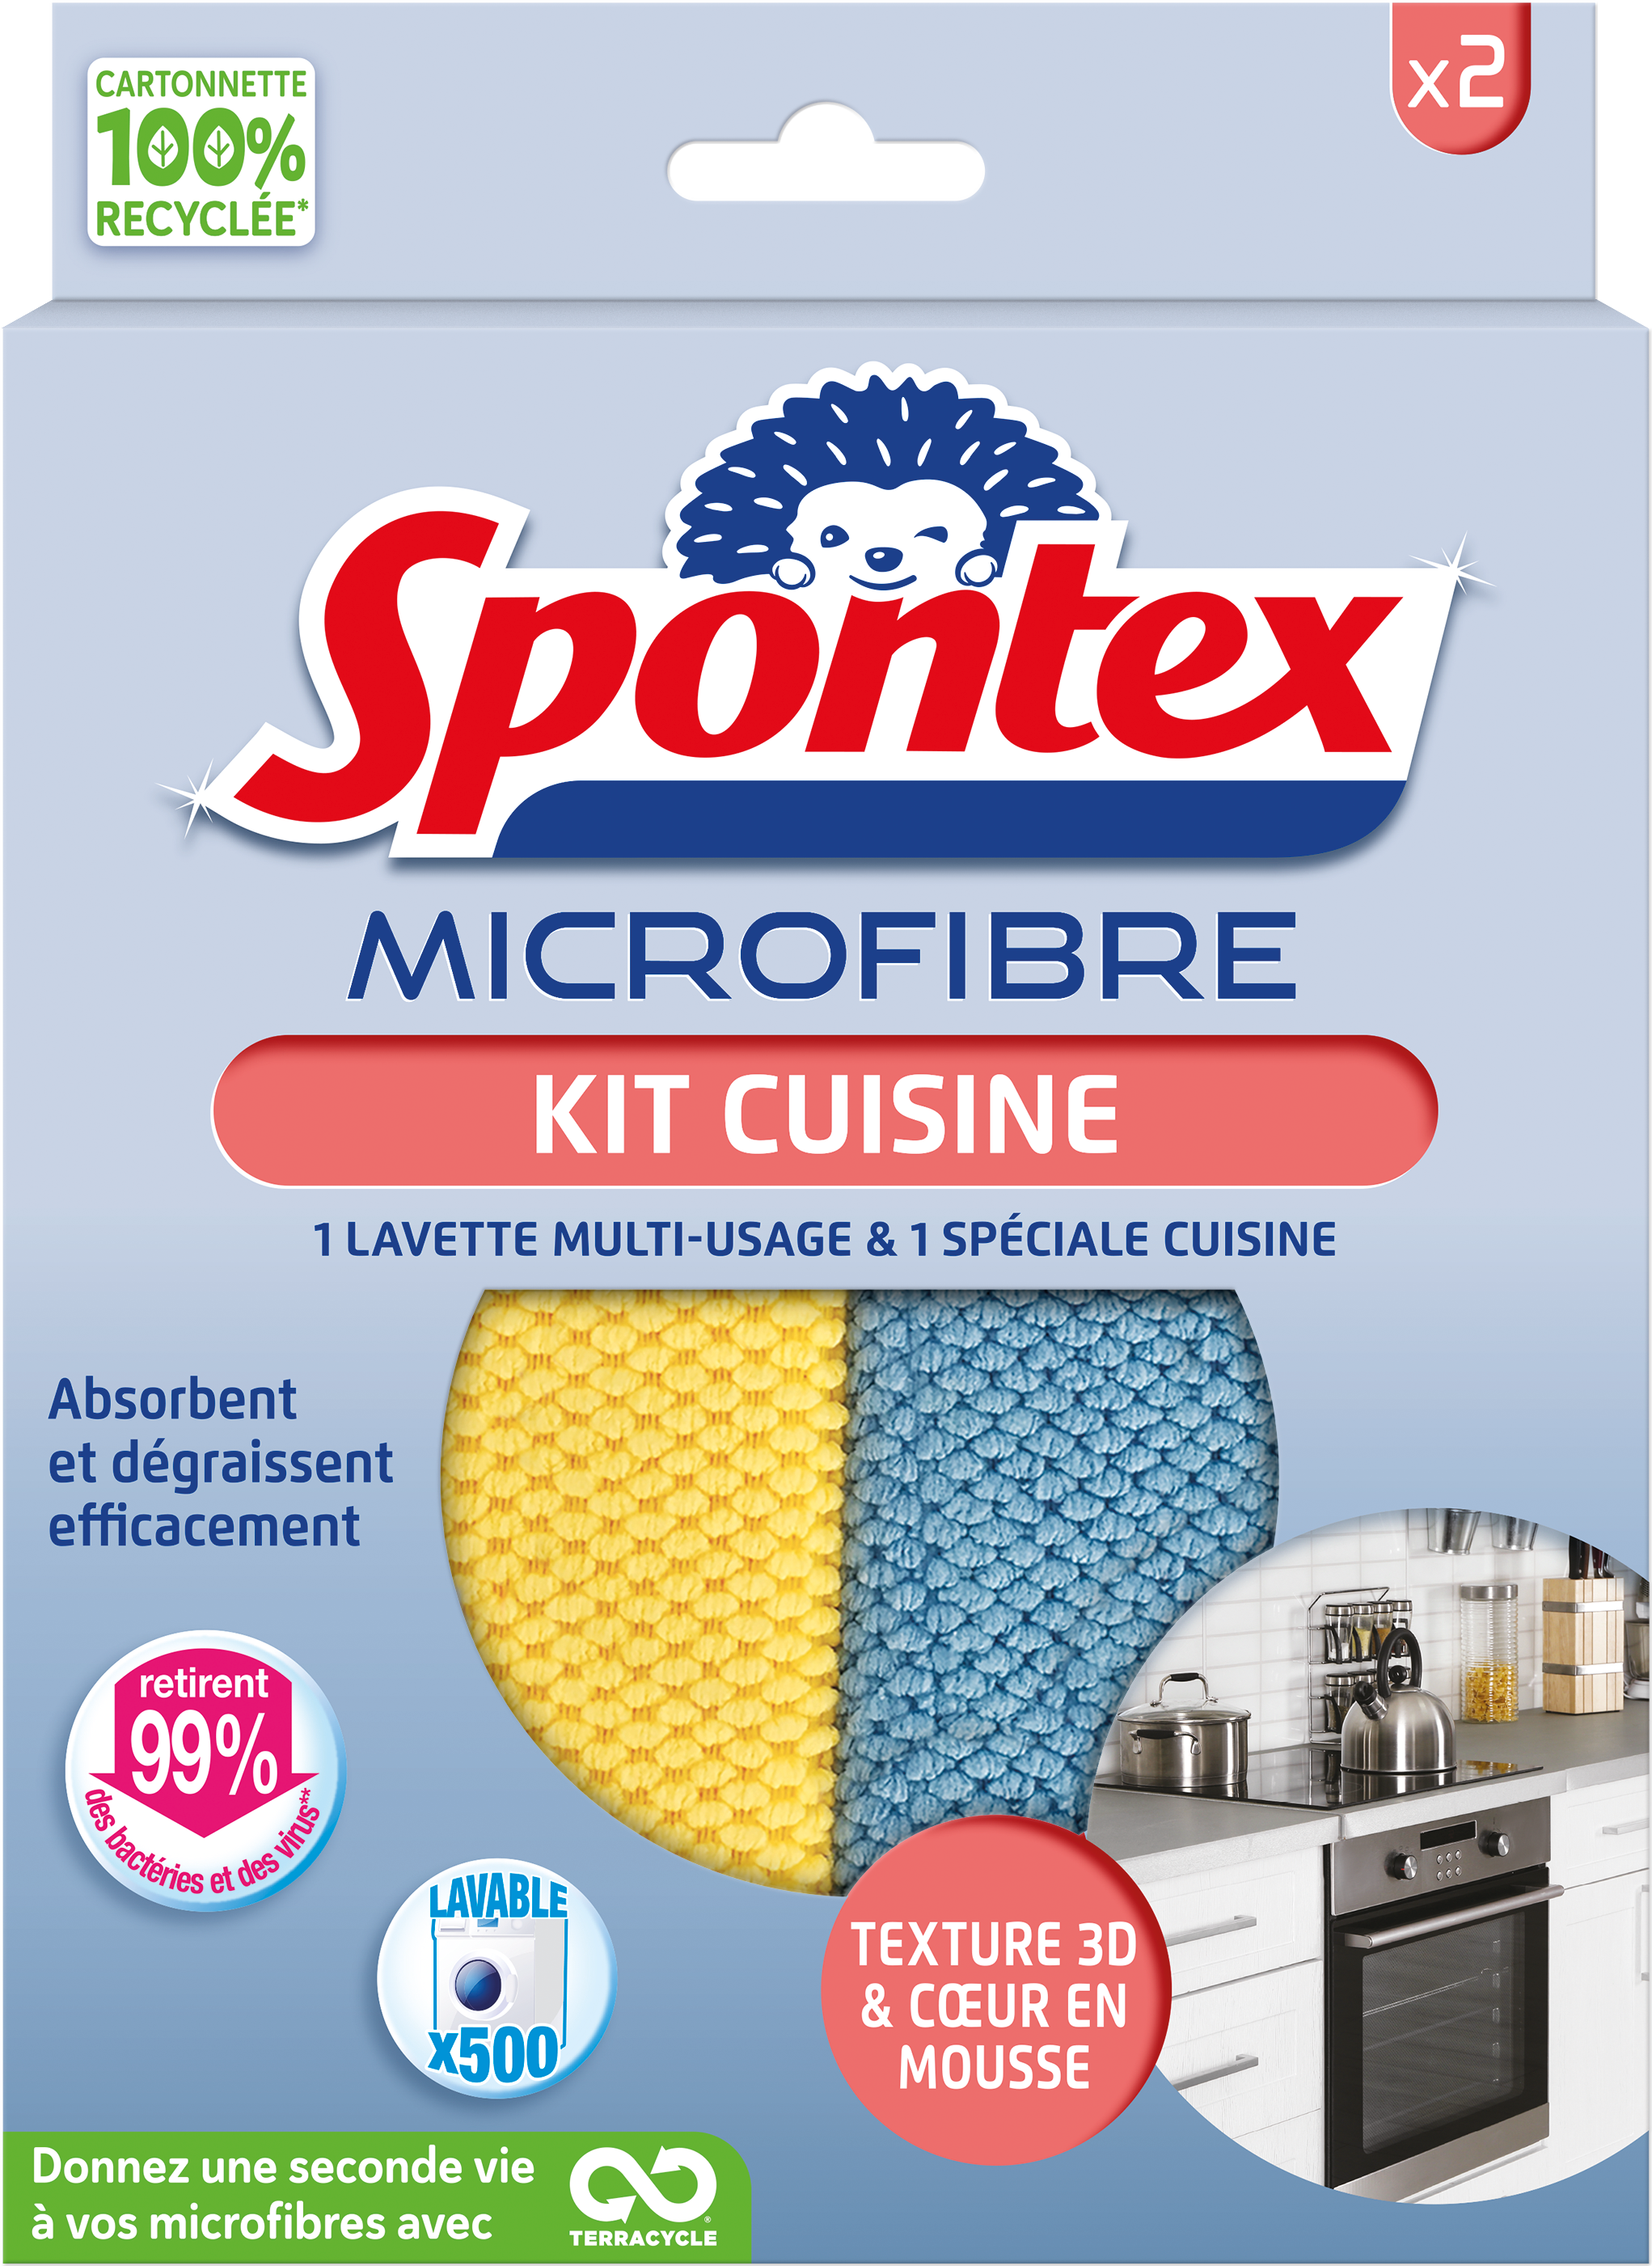 Spontex Microfibre Kits 